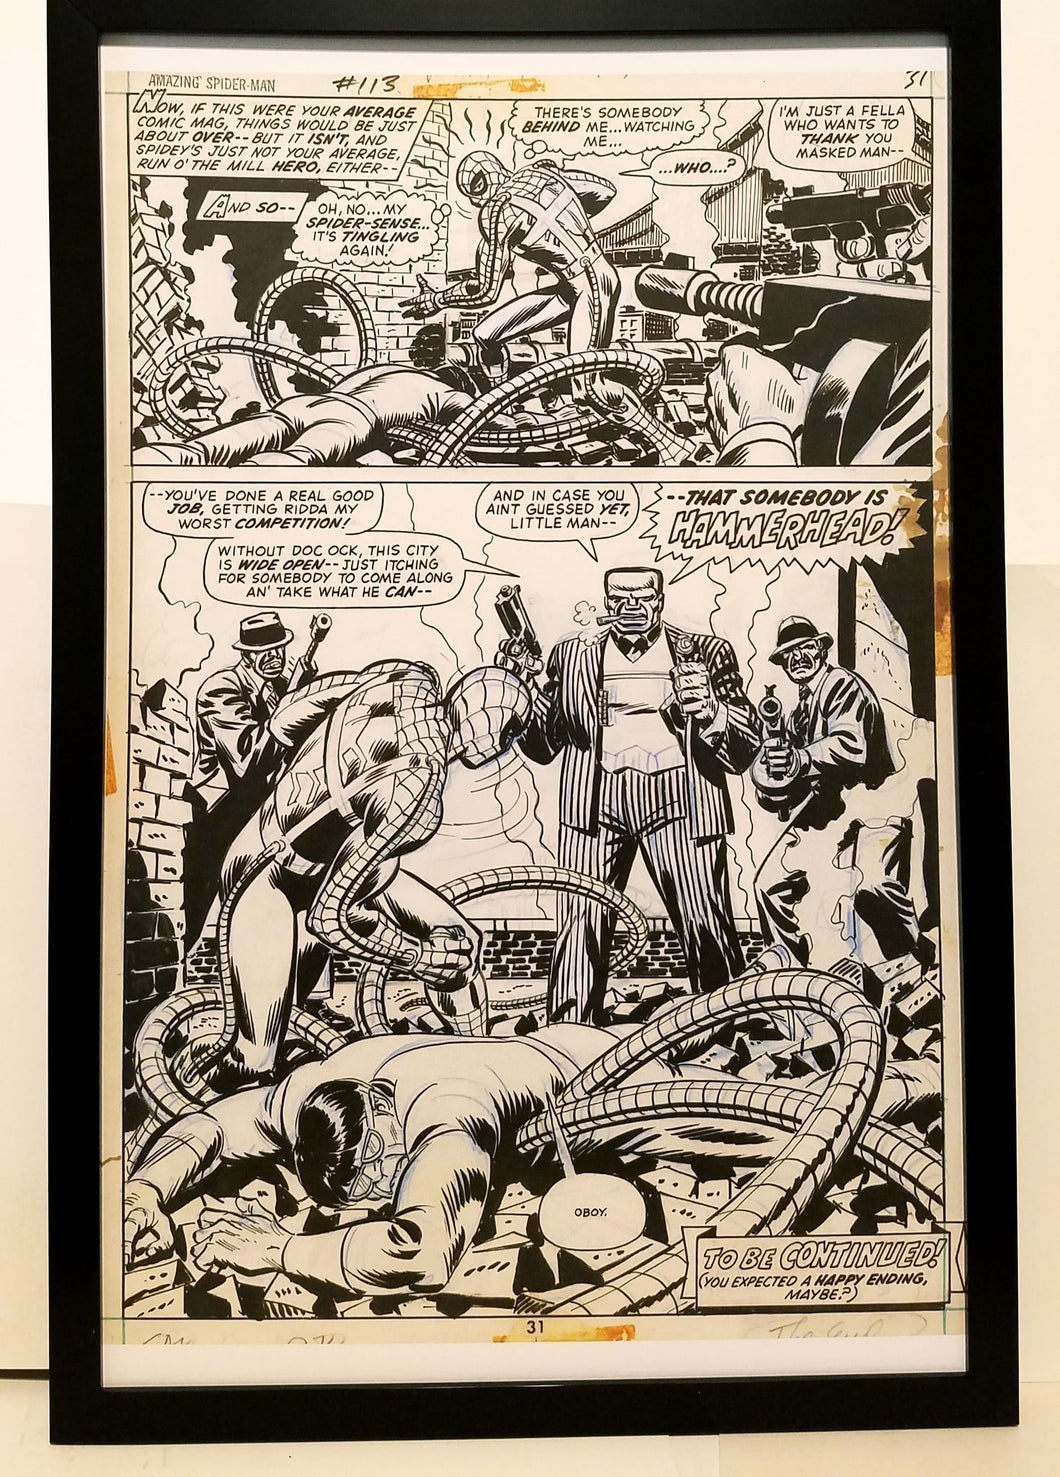 Amazing Spider-Man #113 pg. 31 by John Romita 11x17 FRAMED Original Art Poster Marvel Comics